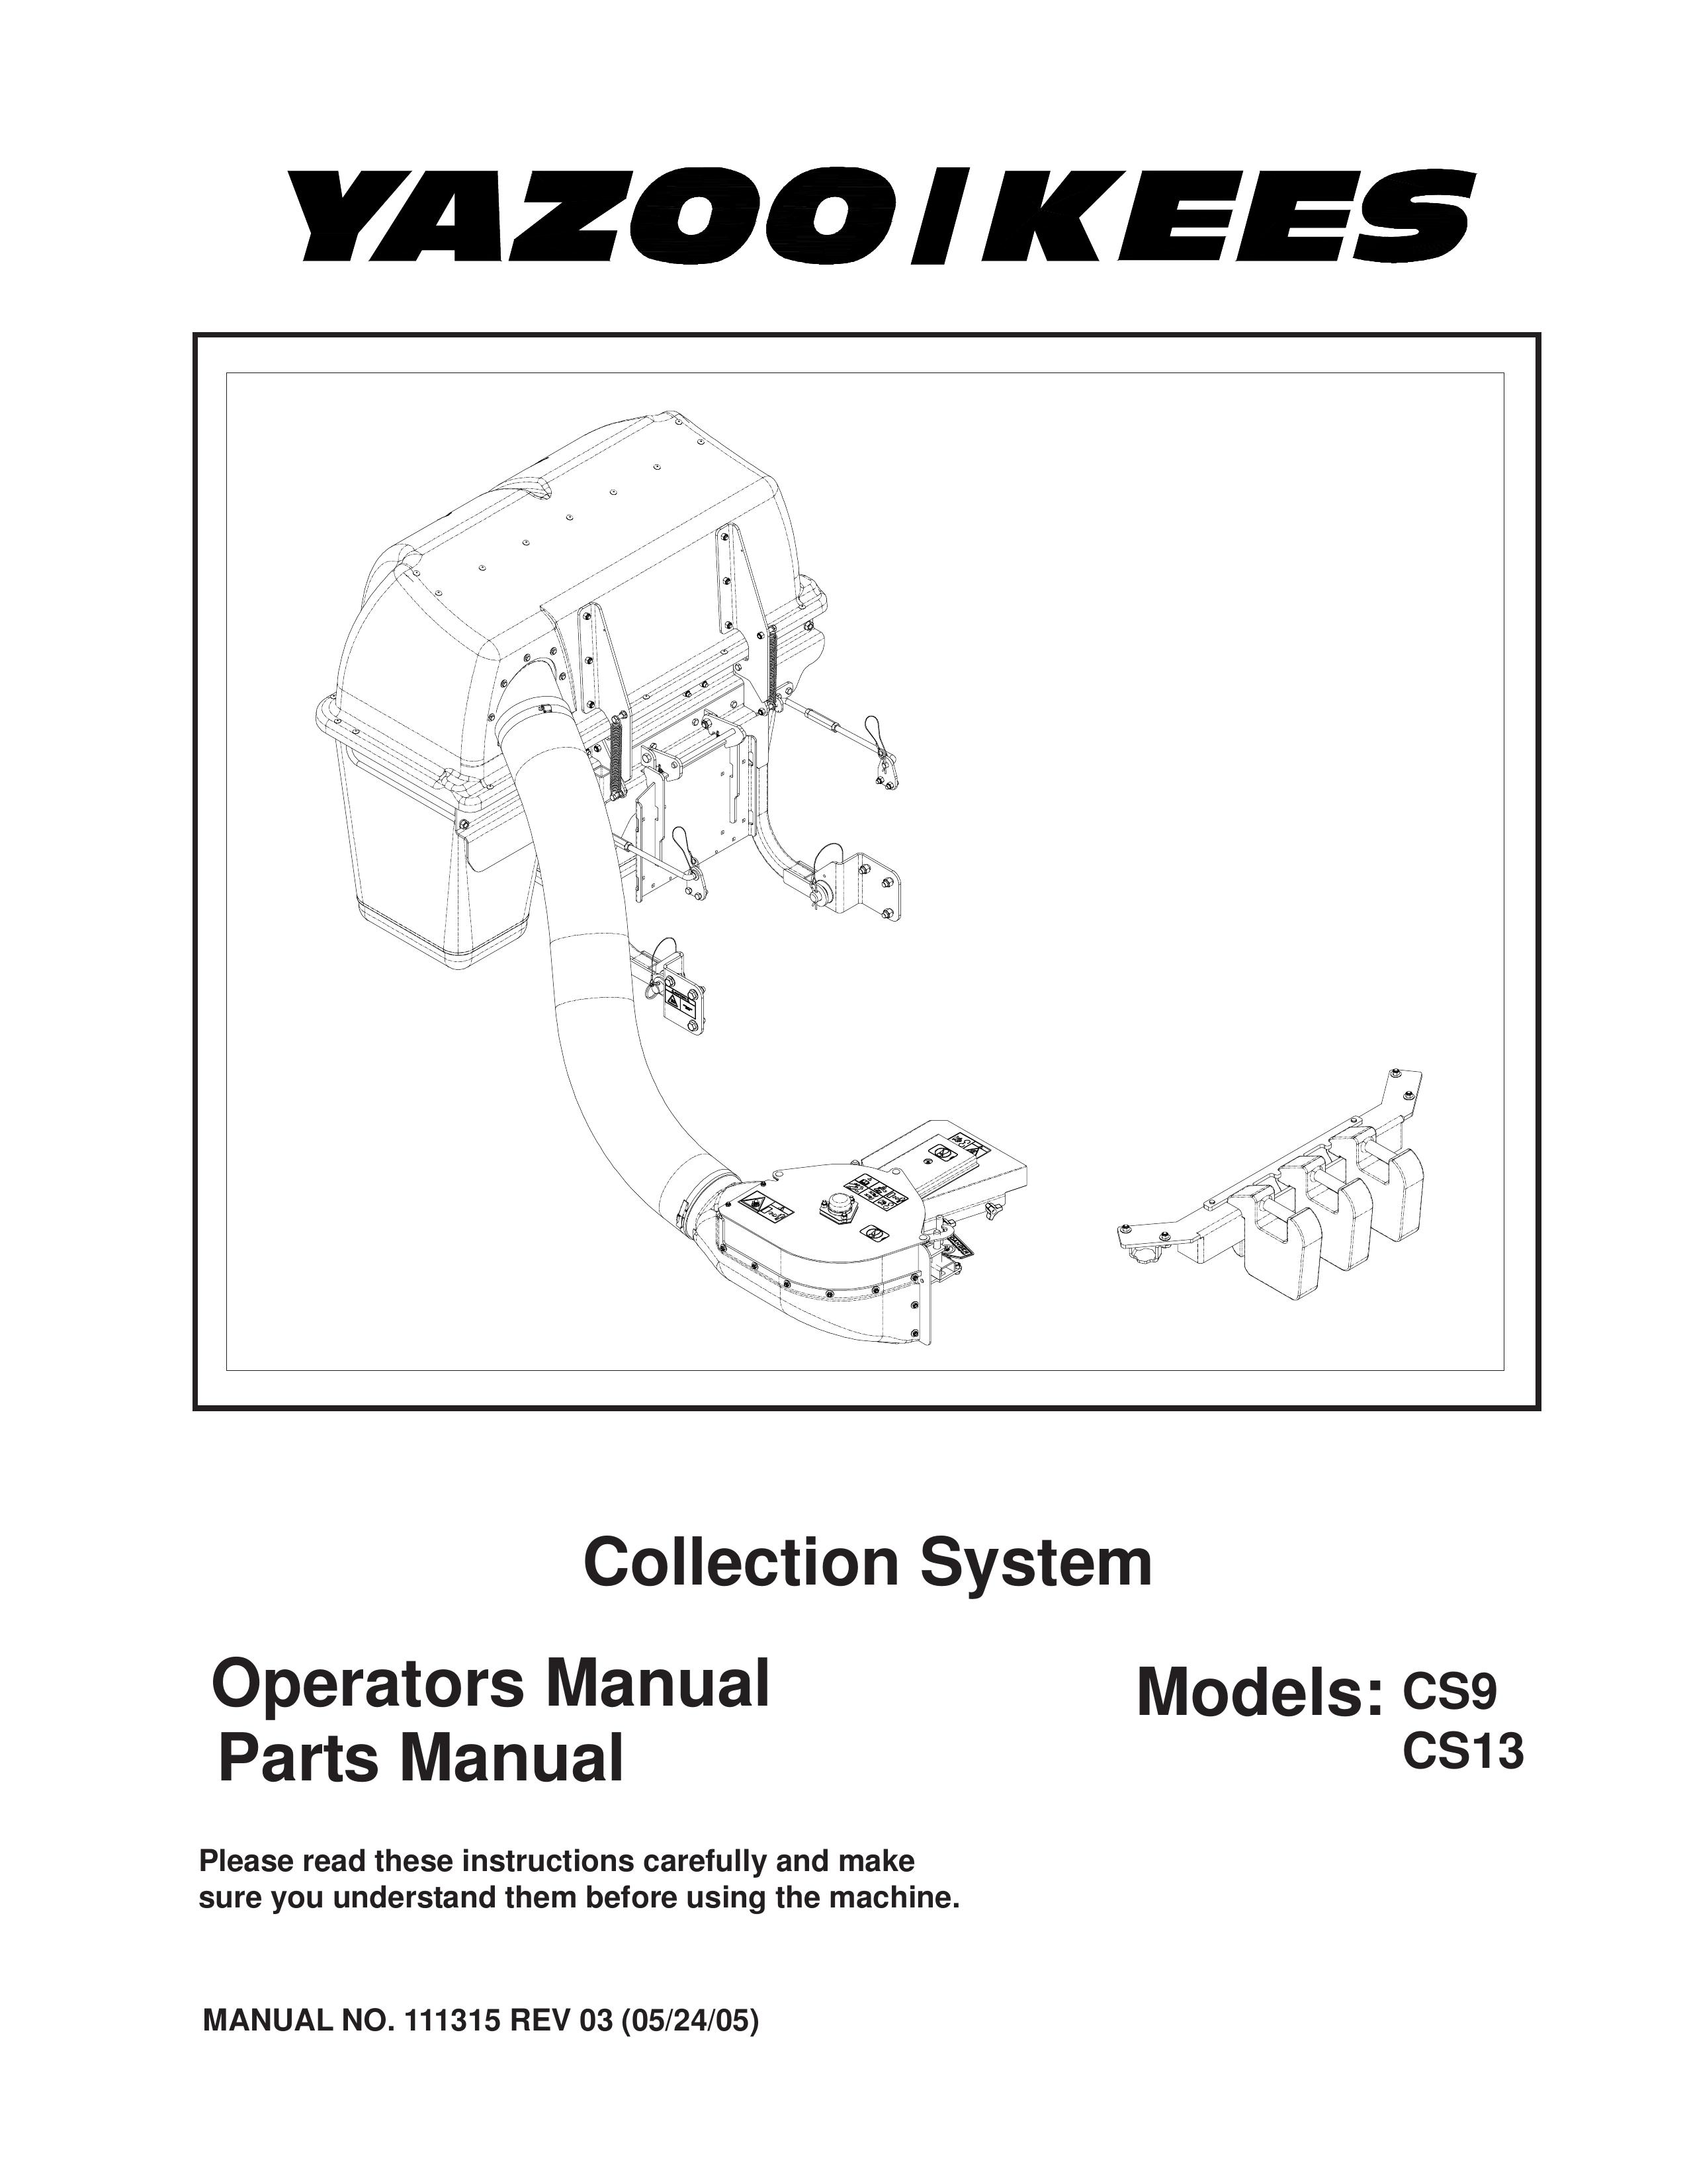 Yazoo/Kees CS13 Lawn Mower User Manual